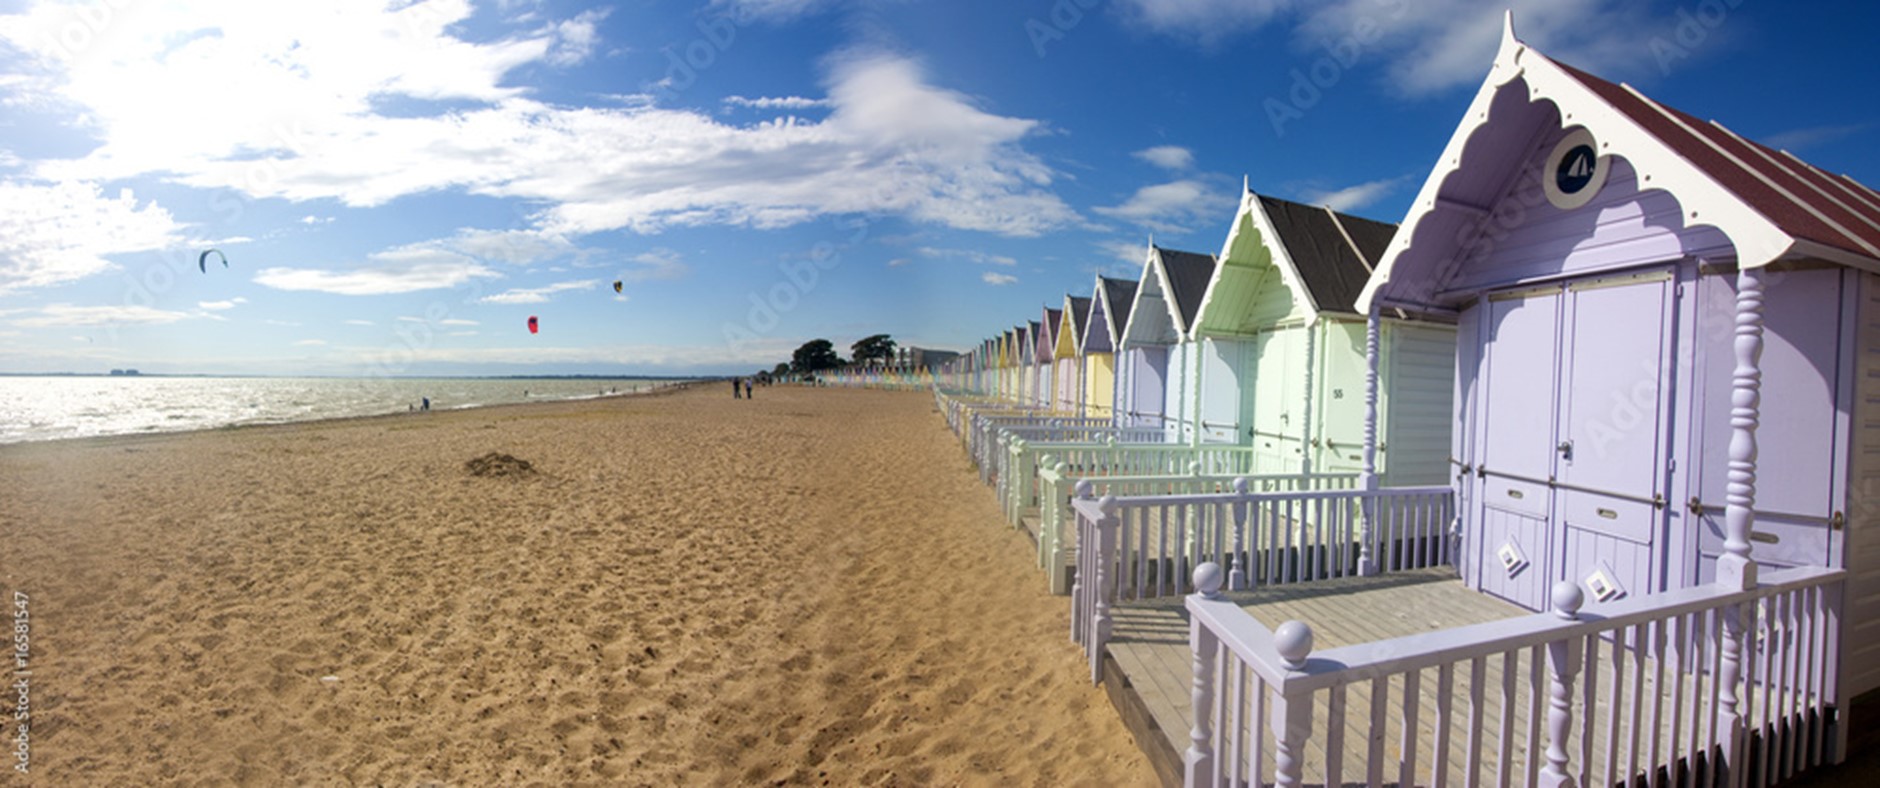 essex beach with beach huts